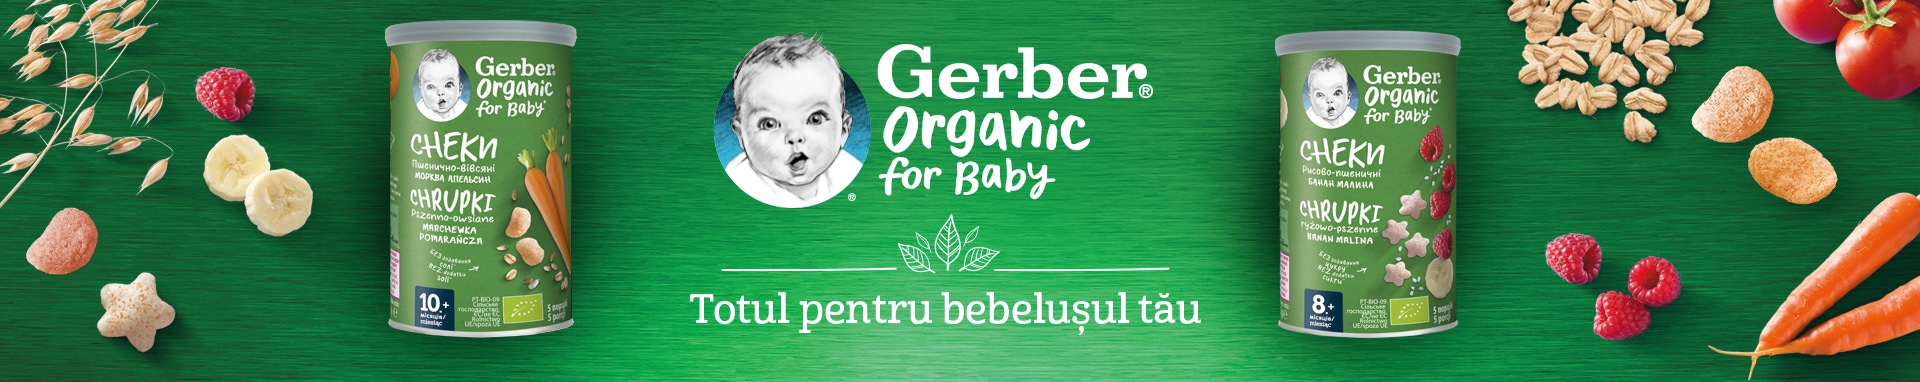 Gerber Organic Nutripuff